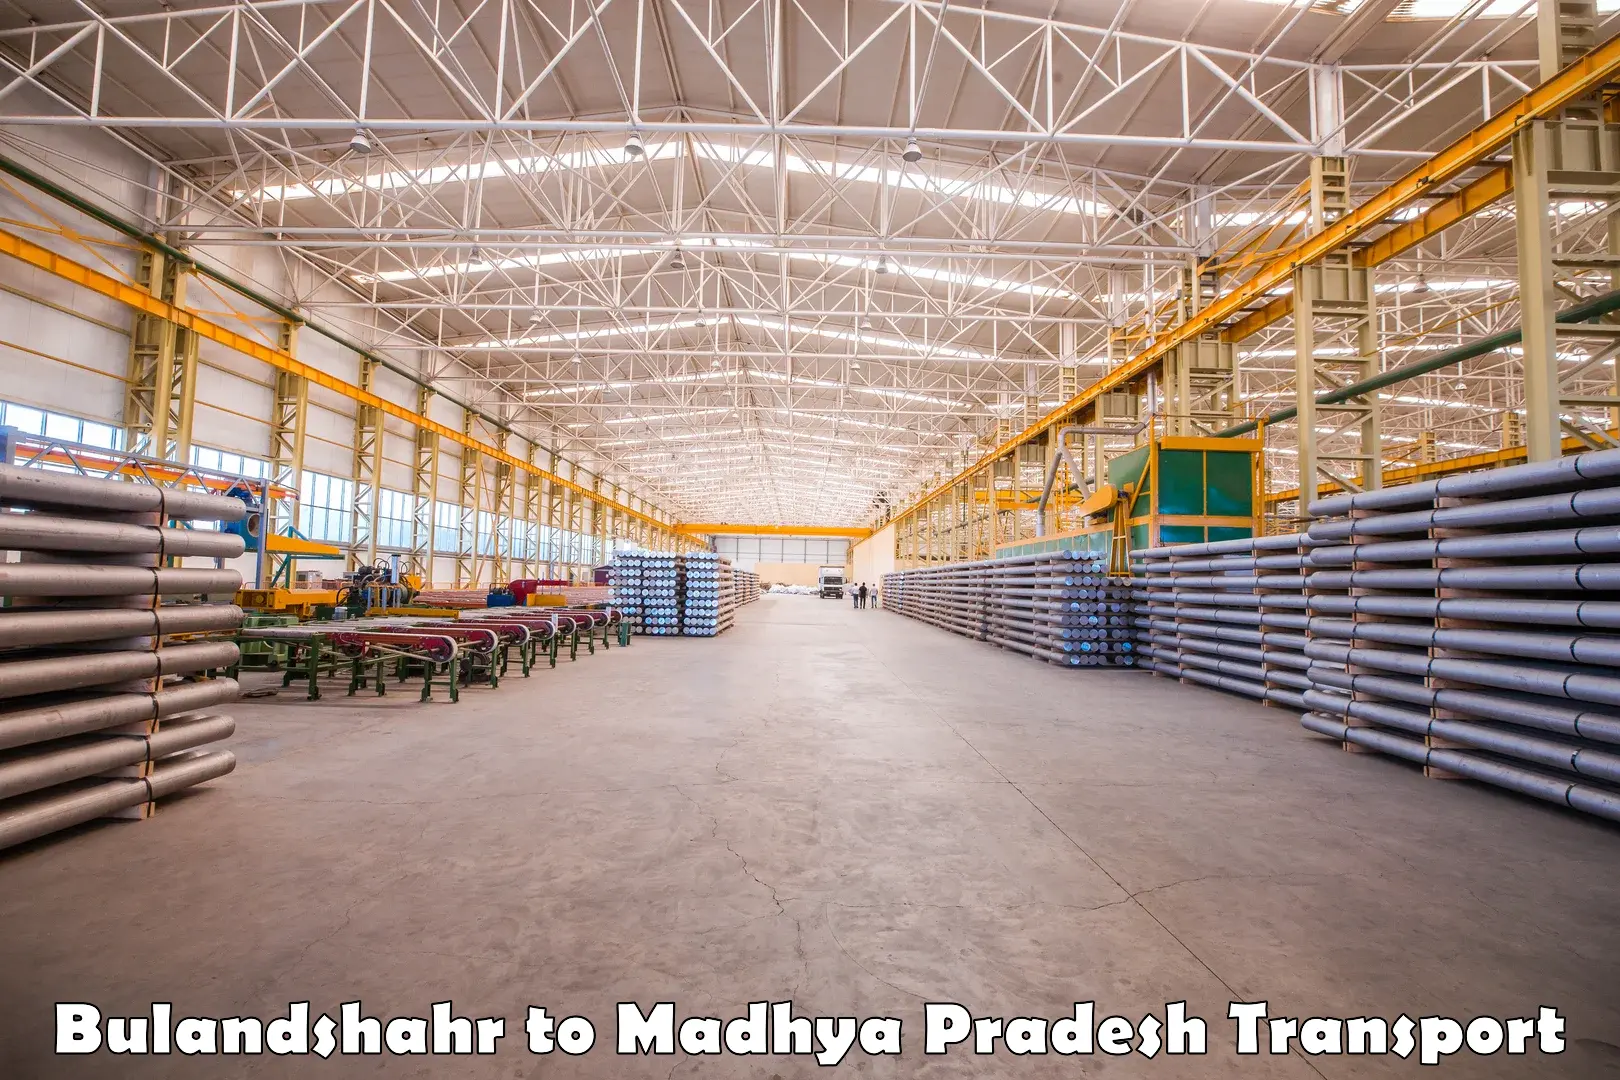 Truck transport companies in India Bulandshahr to Sehore